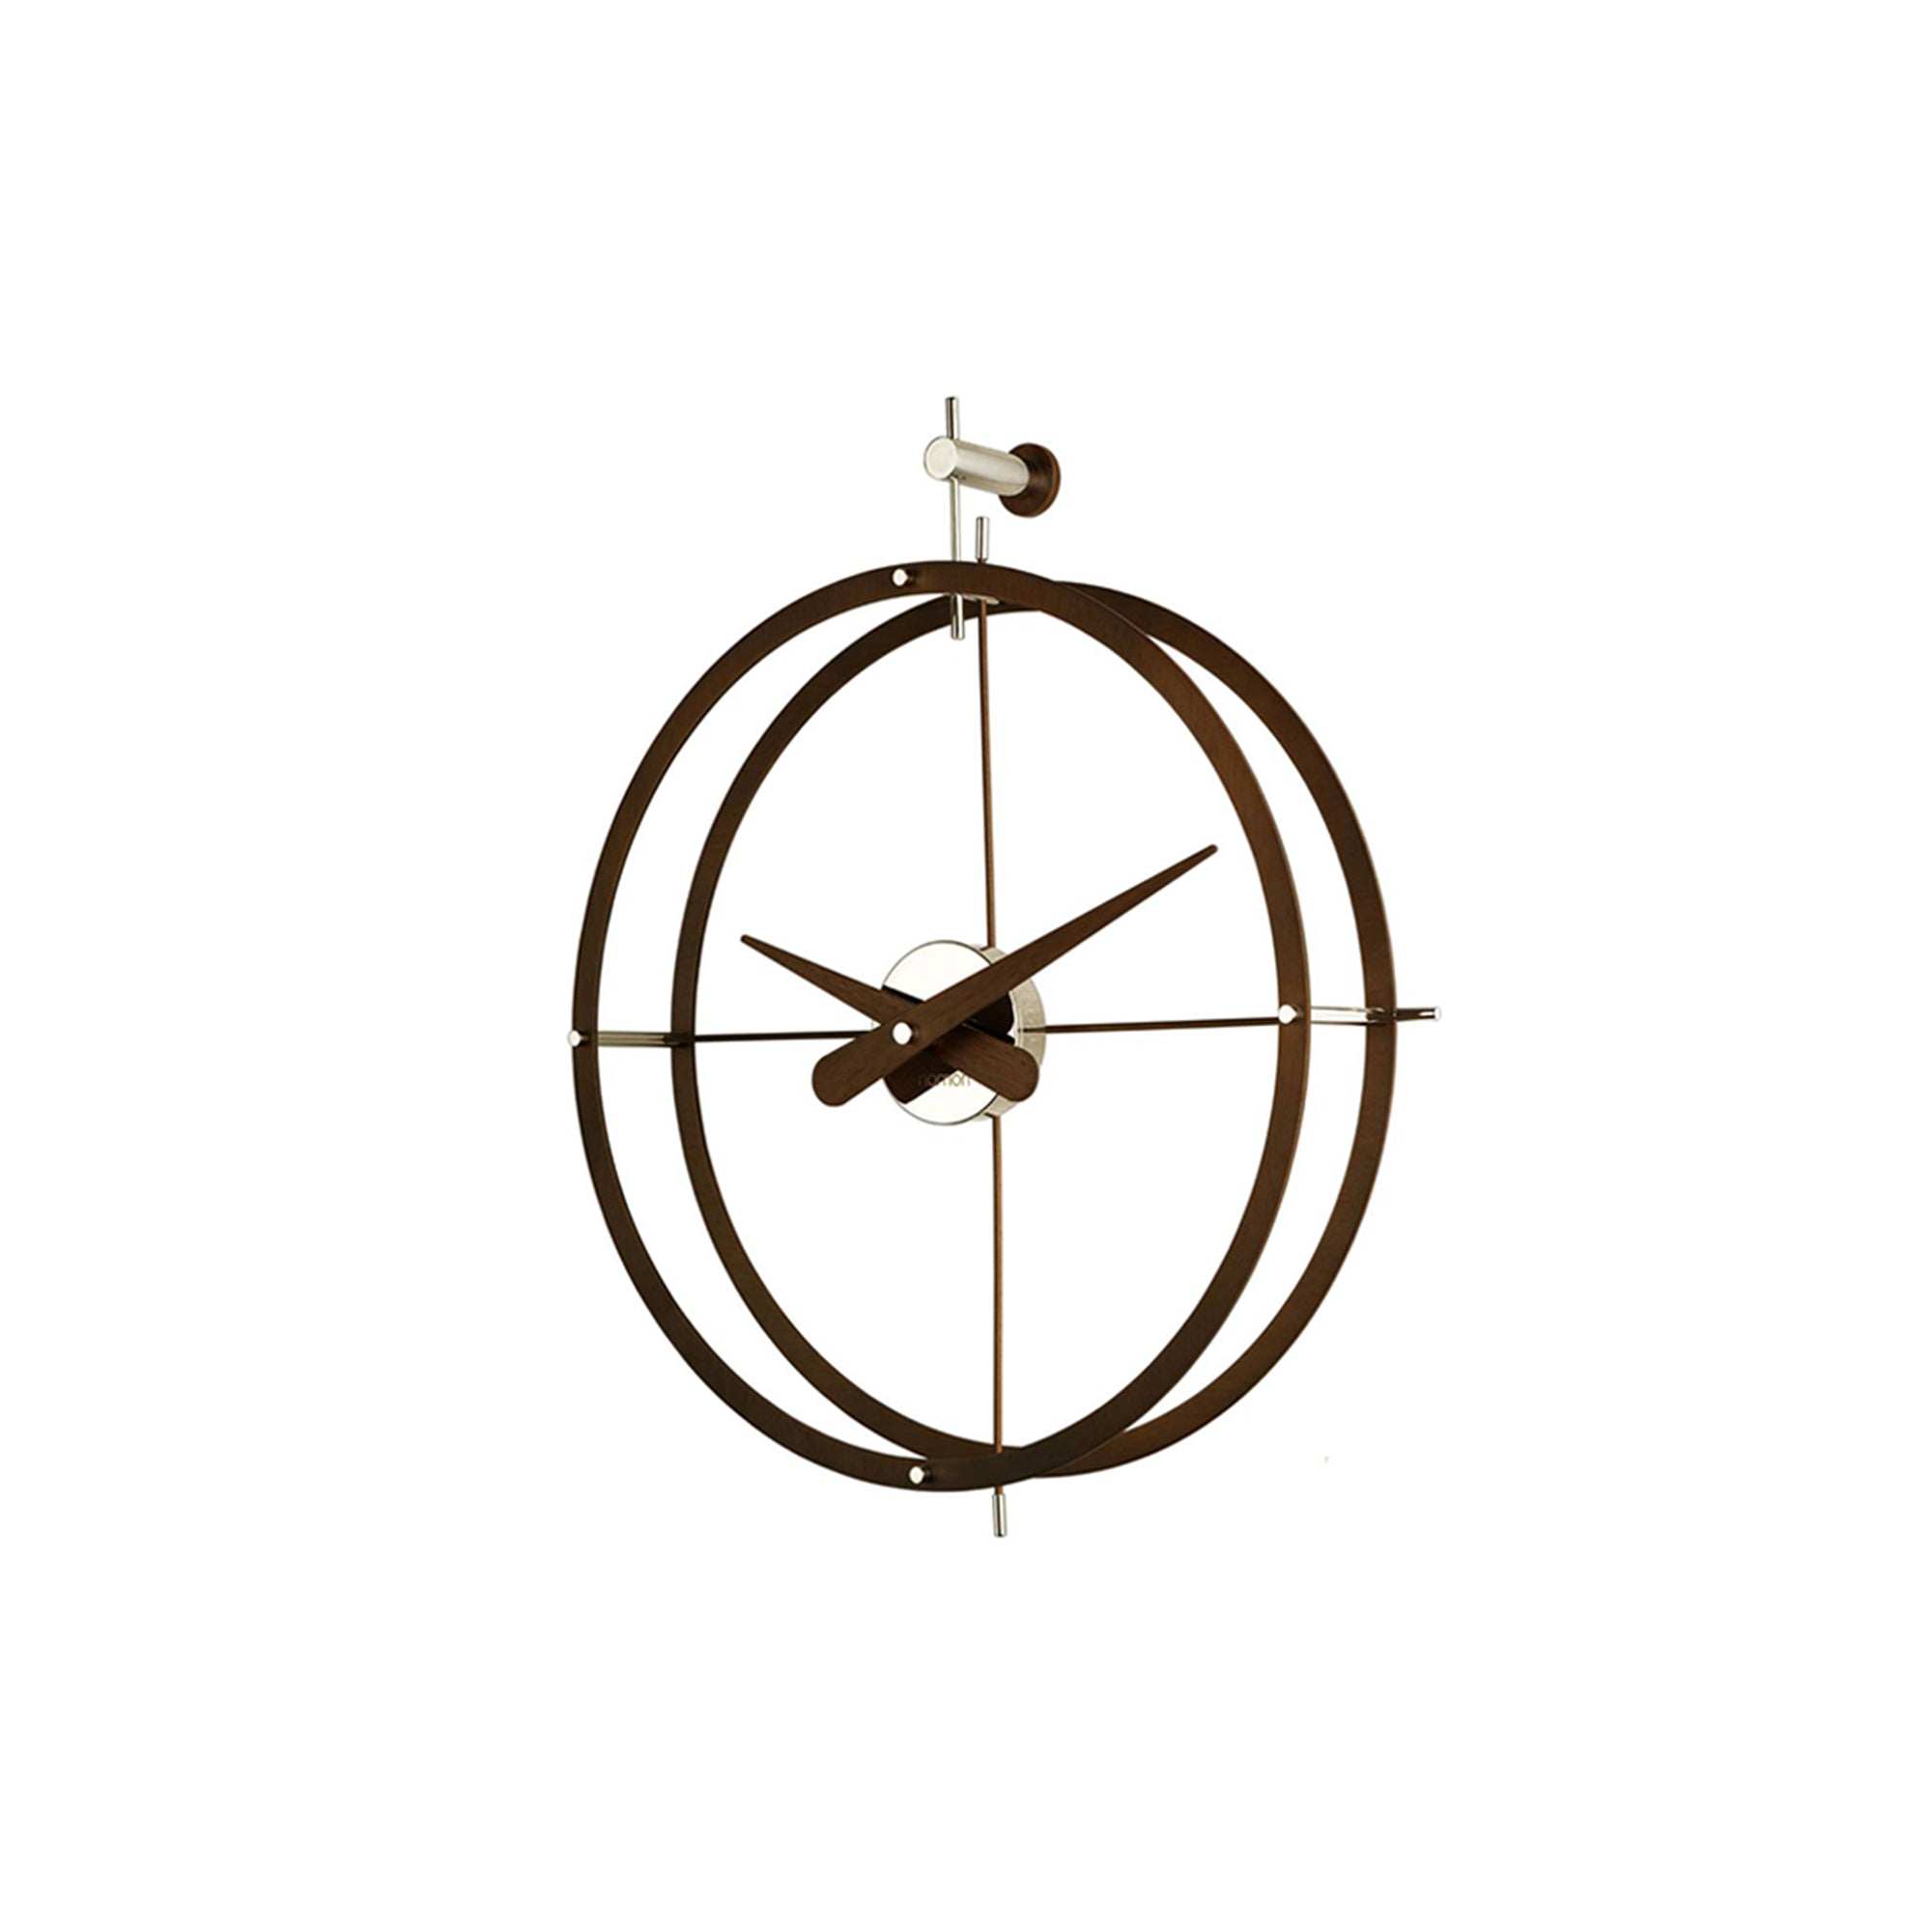 Dos Puntos Wall Clock: Wenge + Chromed Brass